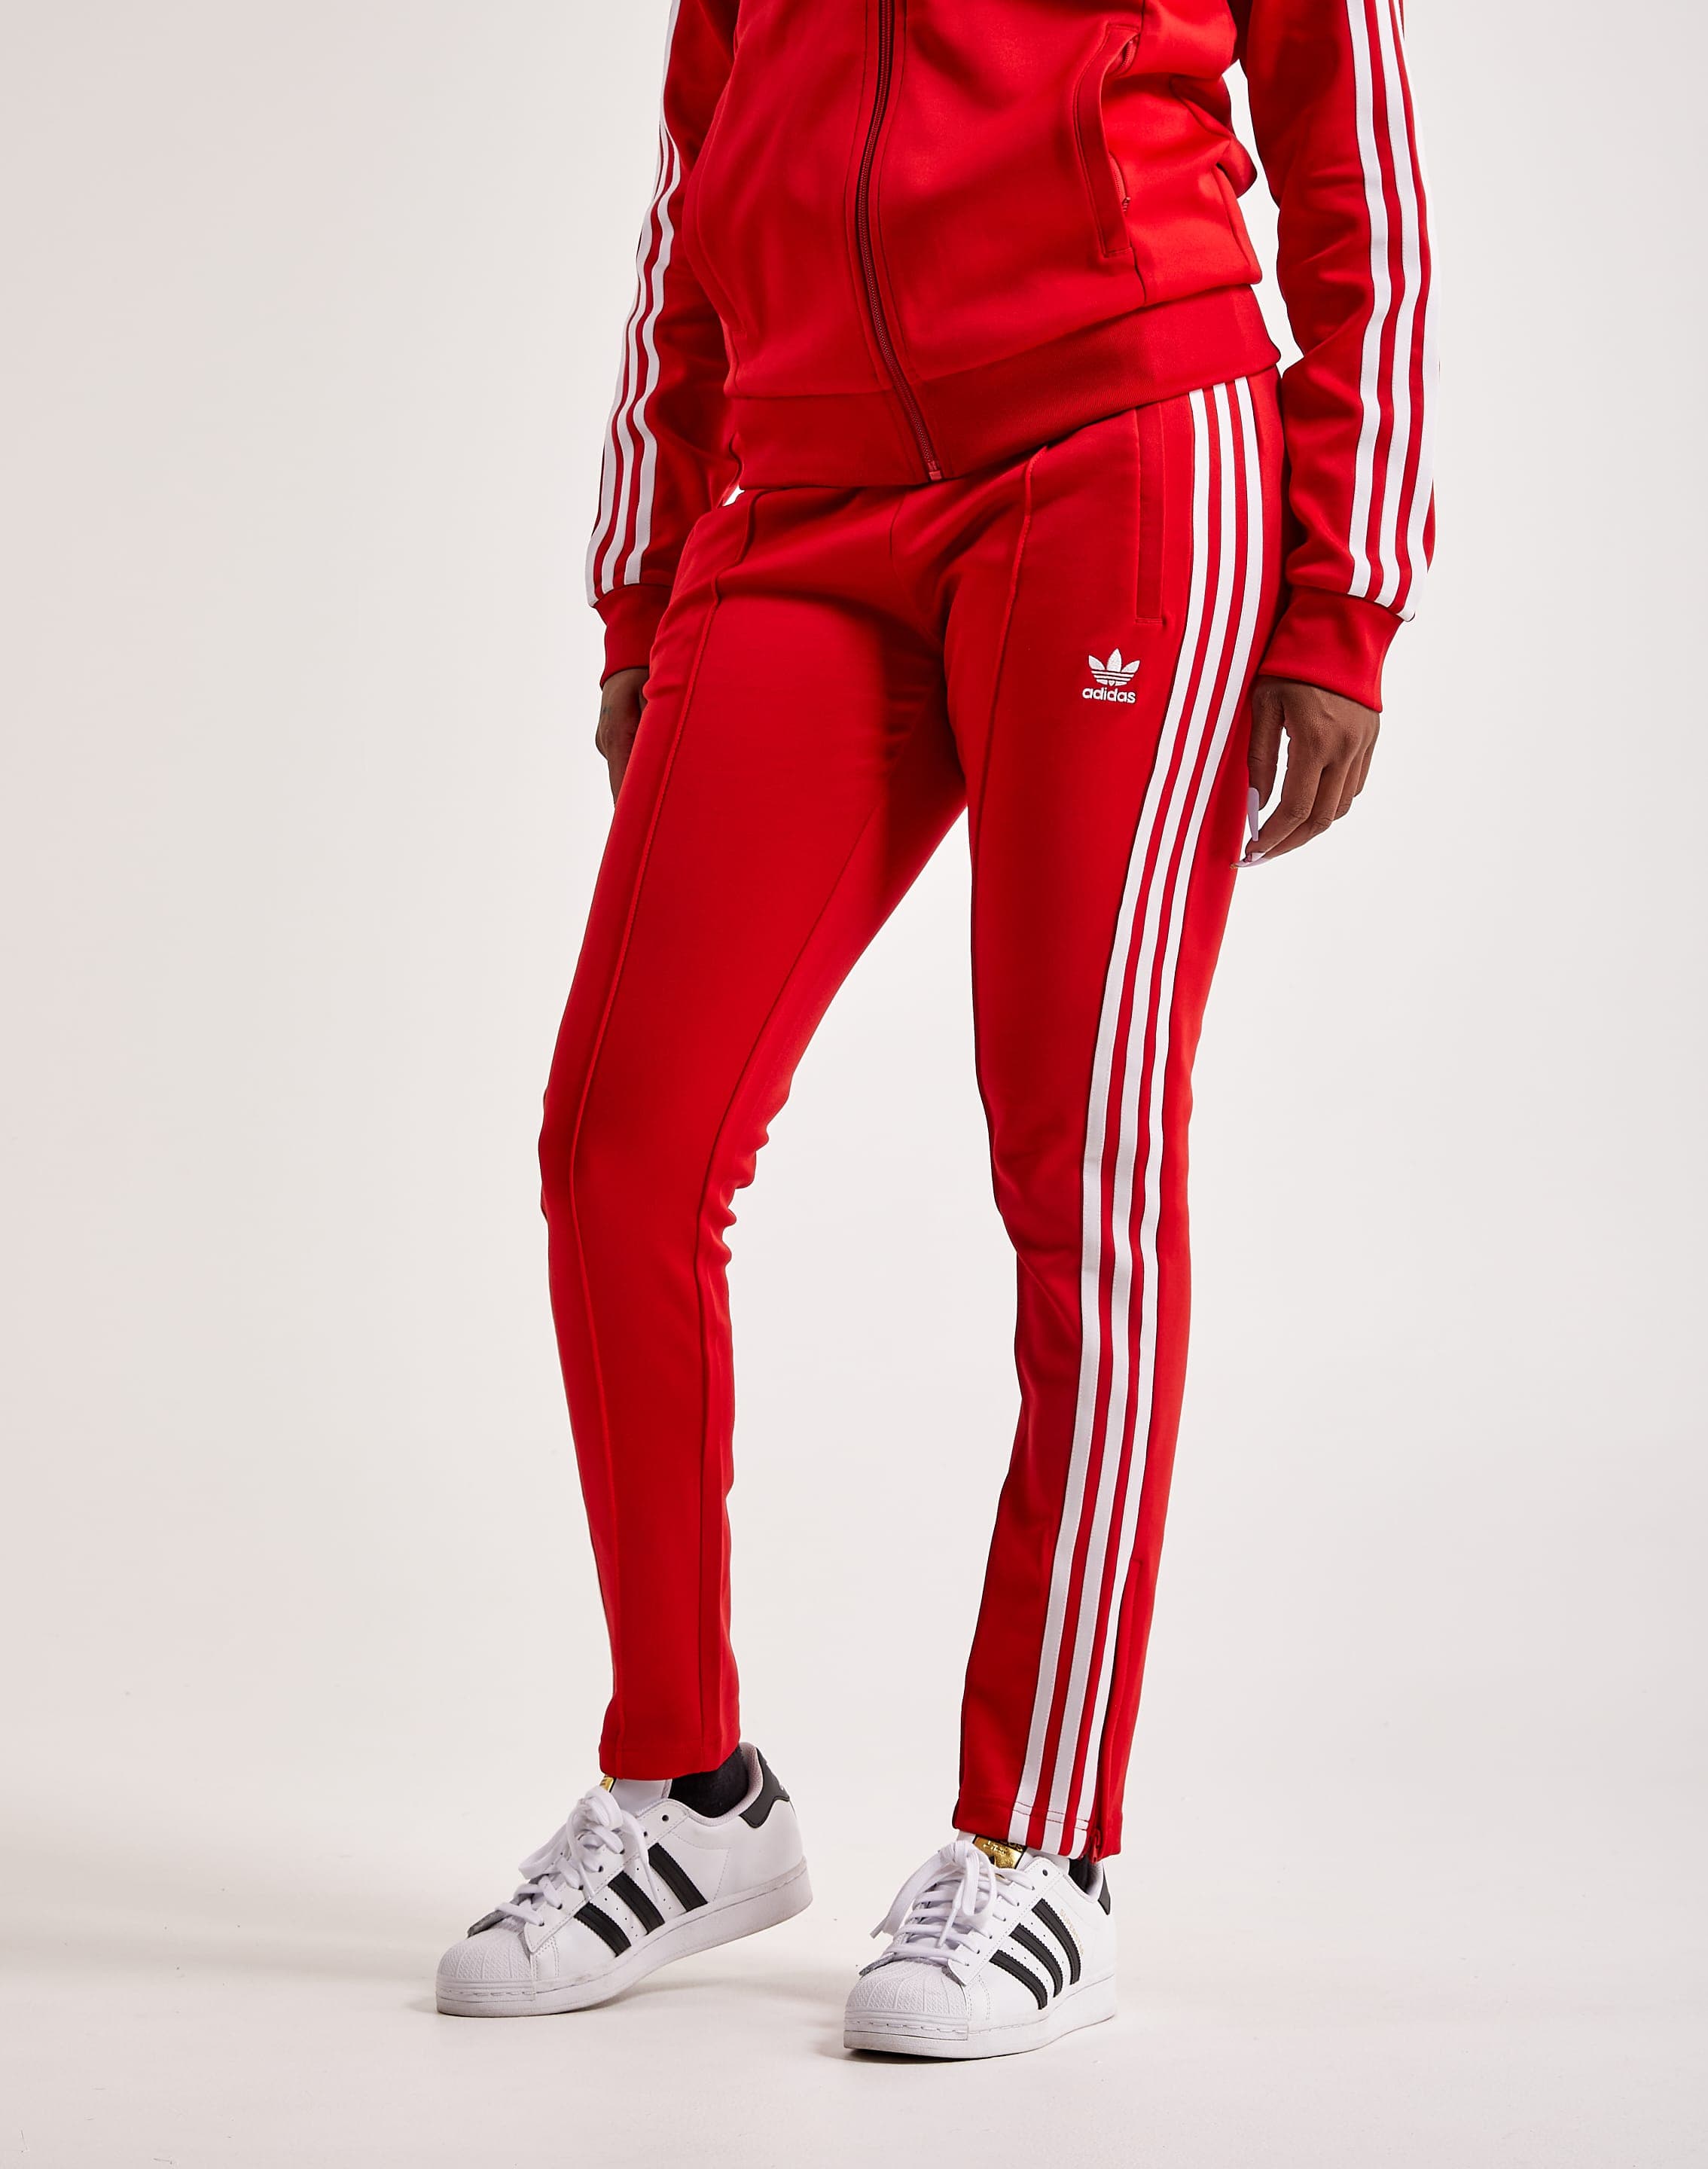 adidas Originals Superstar Track Pants - Women's - AirRobe